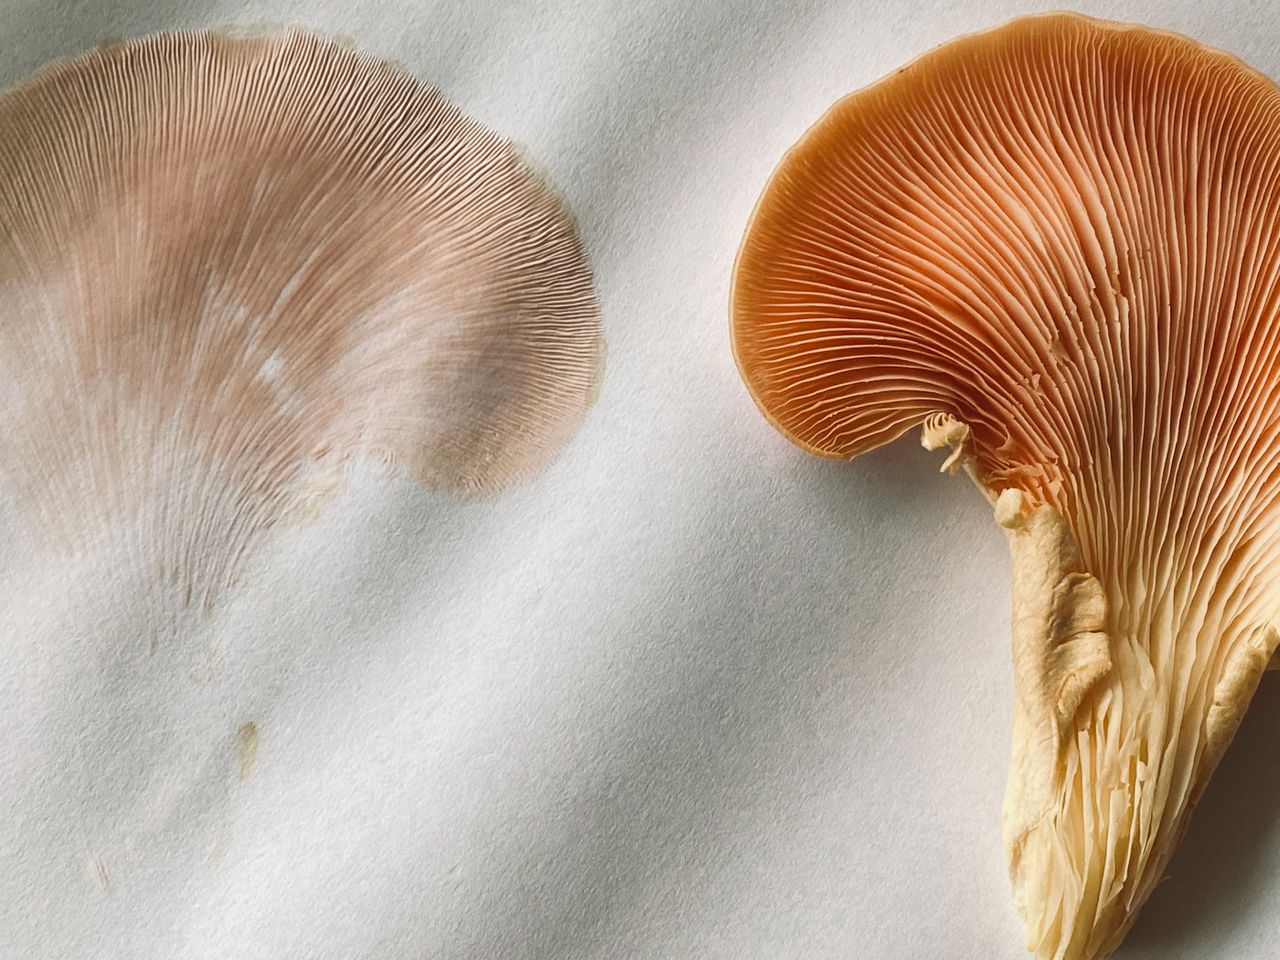 A spore print of one ear of the mushroom